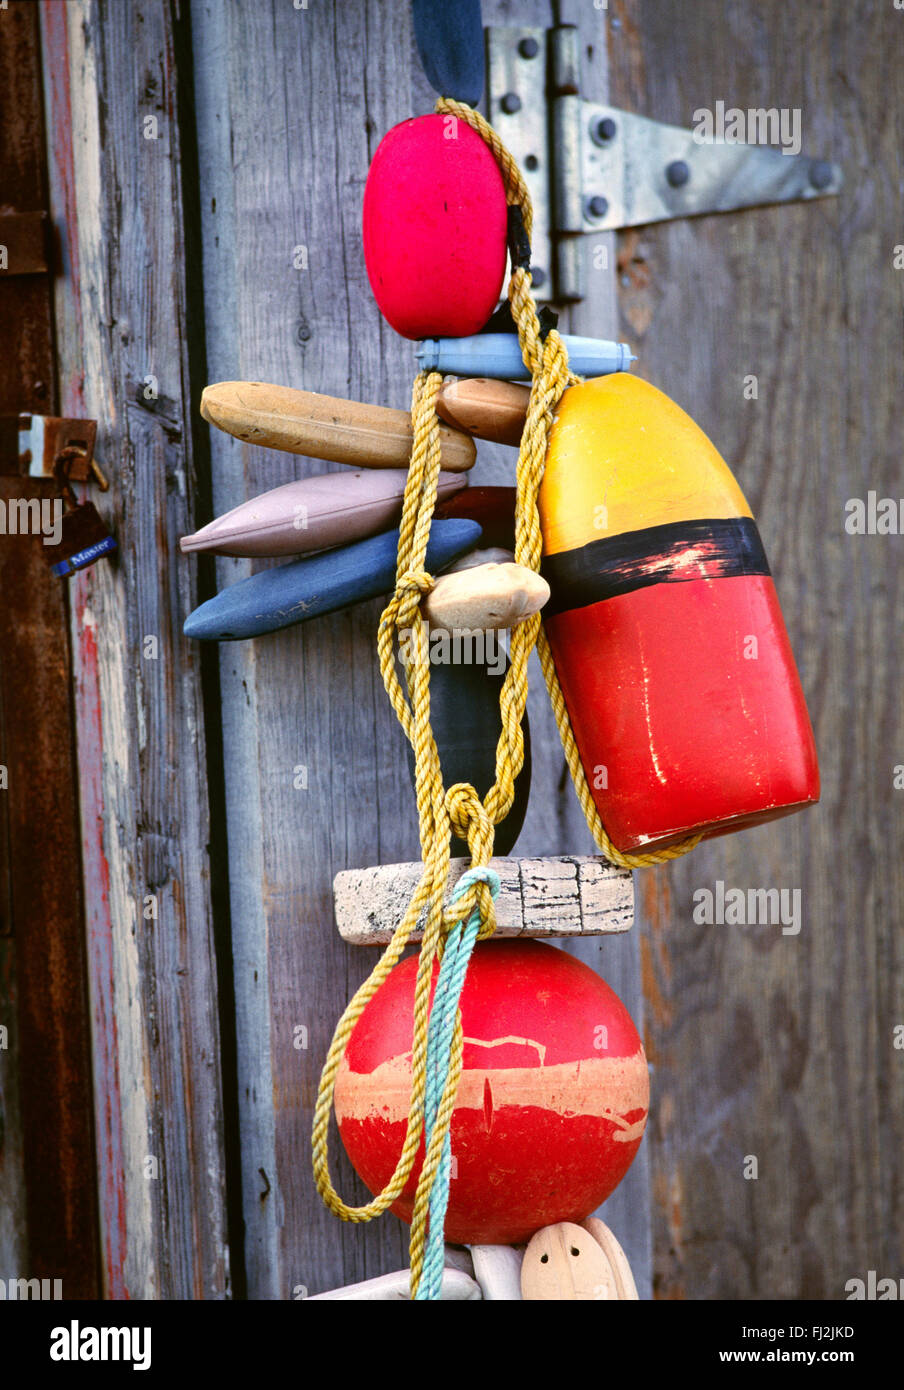 https://c8.alamy.com/comp/FJ2JKD/fishing-net-floats-decorate-the-wall-of-an-old-fishermans-shack-homer-FJ2JKD.jpg